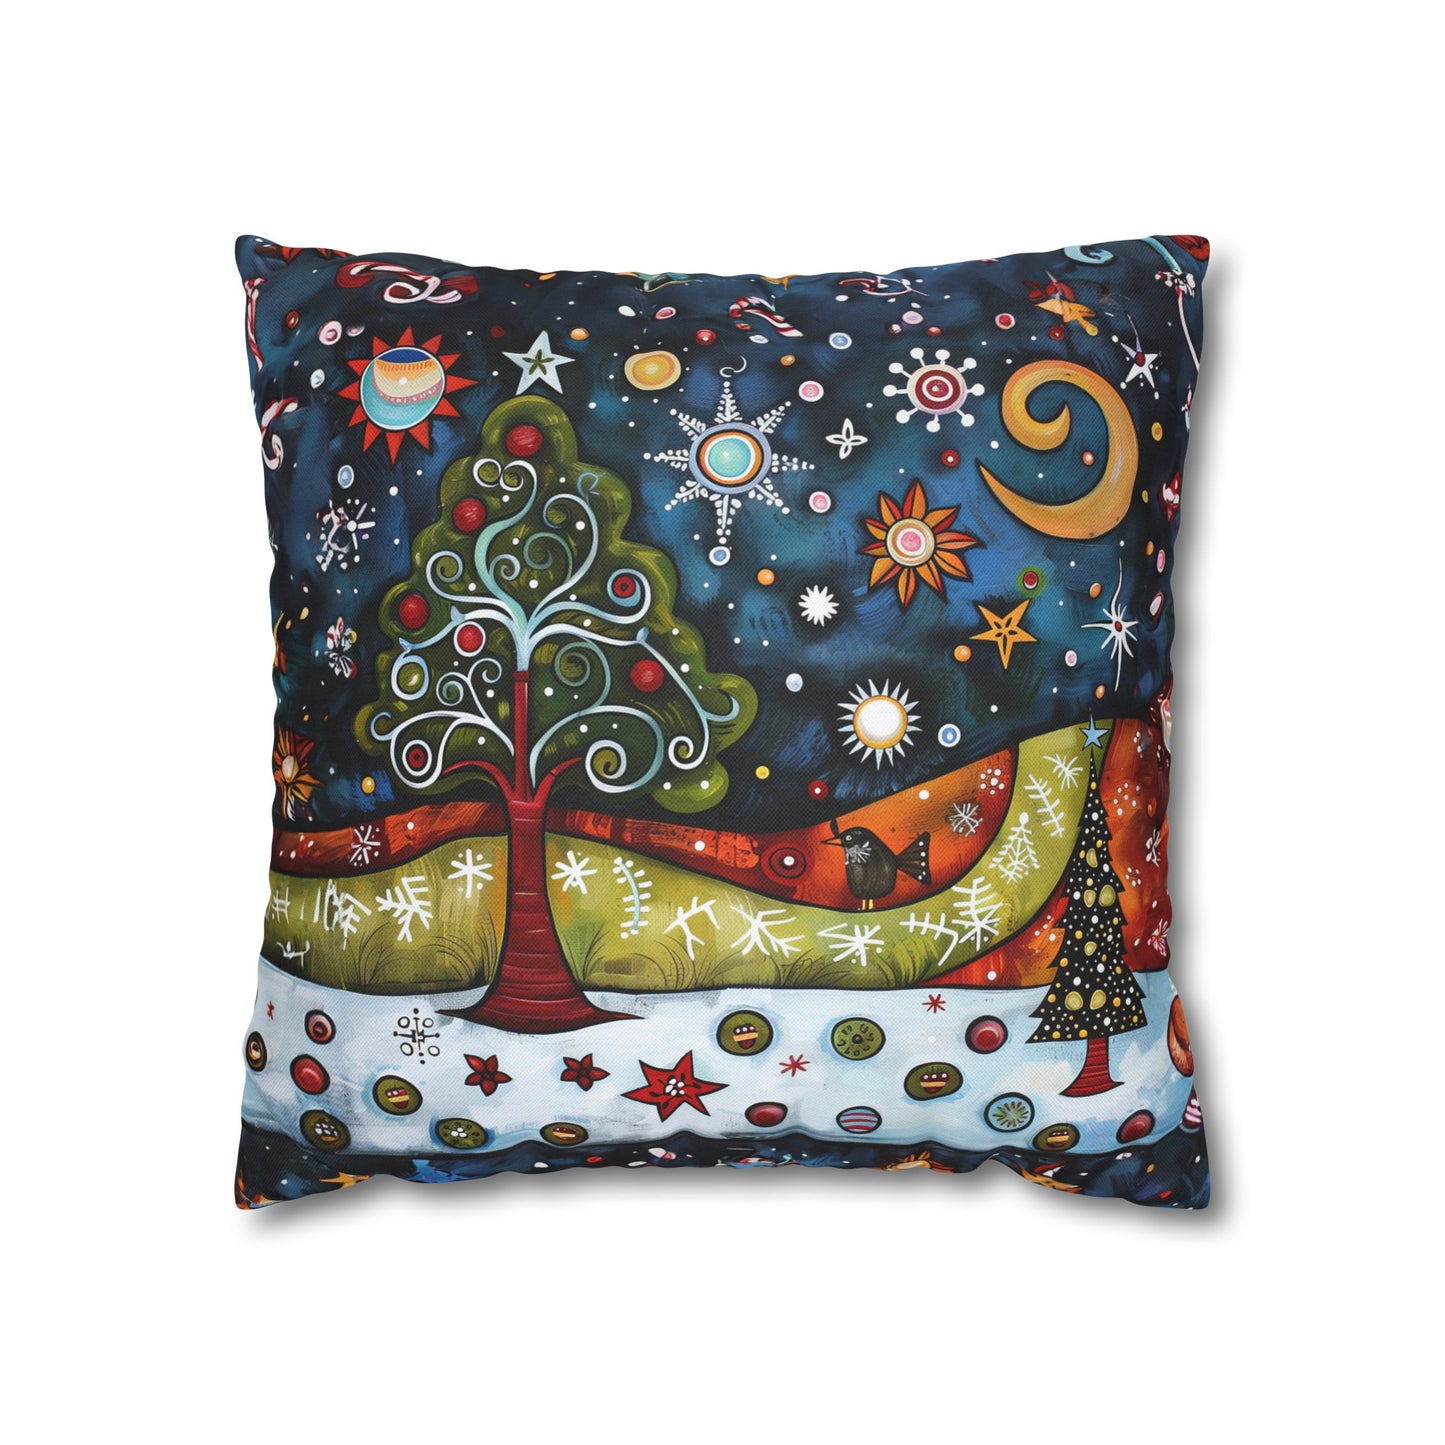 Whimsical Winter Village: Abstract Folk Art Christmas Scene Spun Polyester Square Pillowcase 4 Sizes